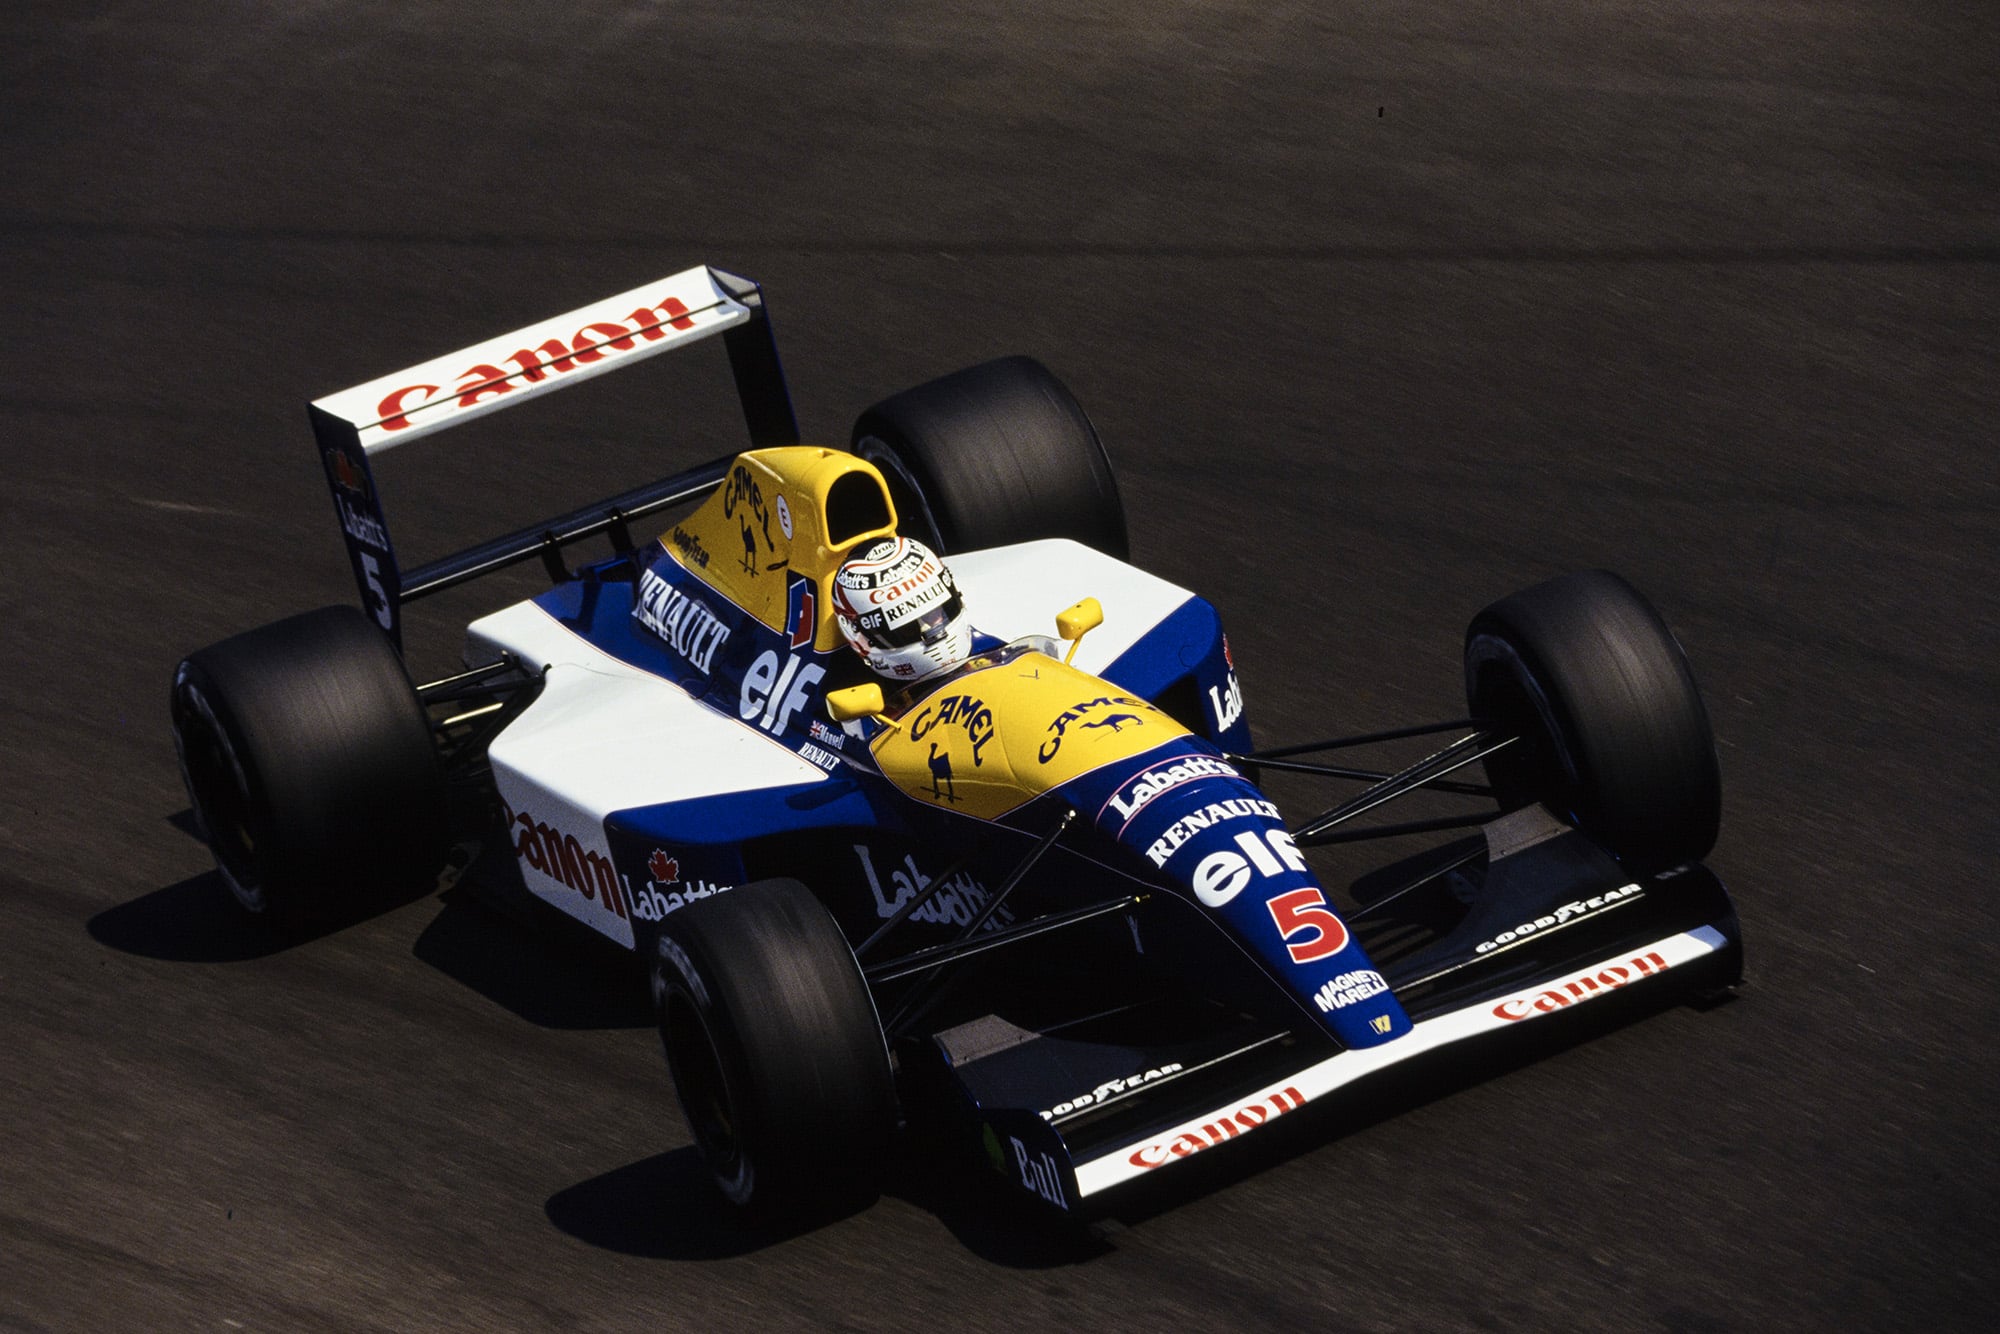 Nigel Mansell in the 1992 Williams FW14B